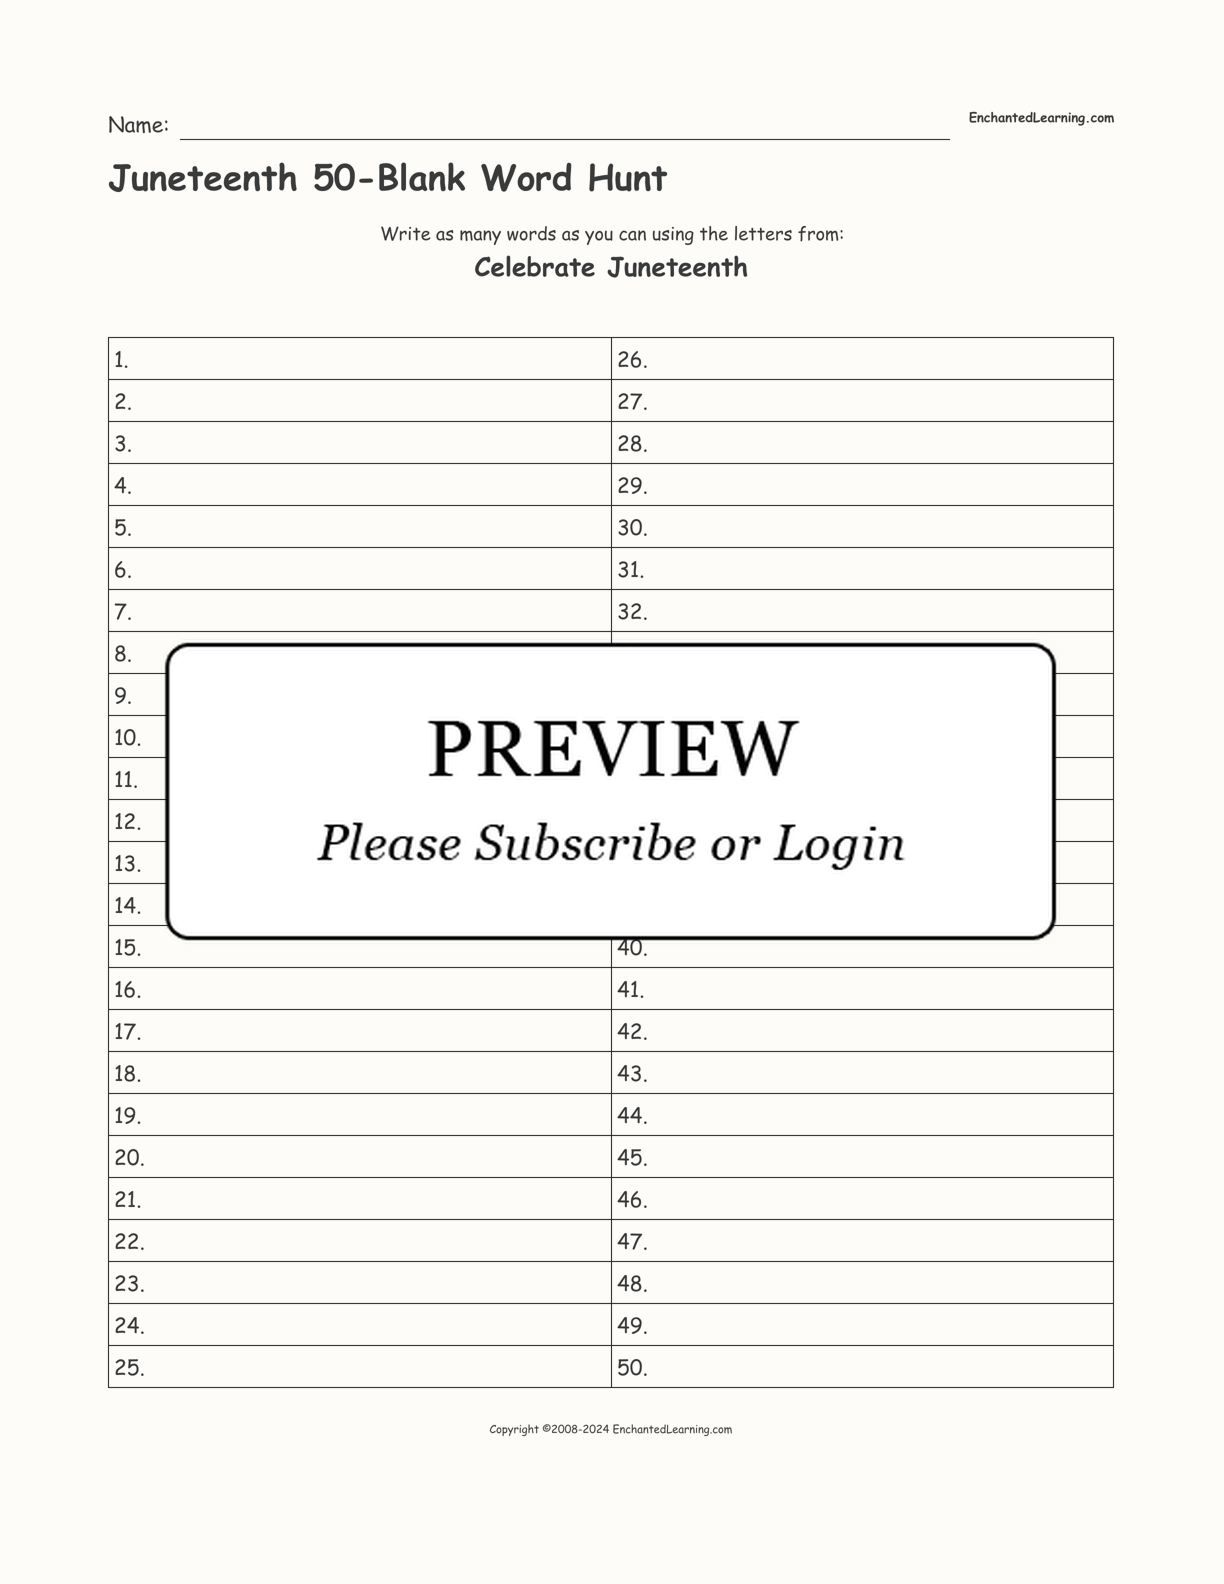 Juneteenth 50-Blank Word Hunt interactive worksheet page 1